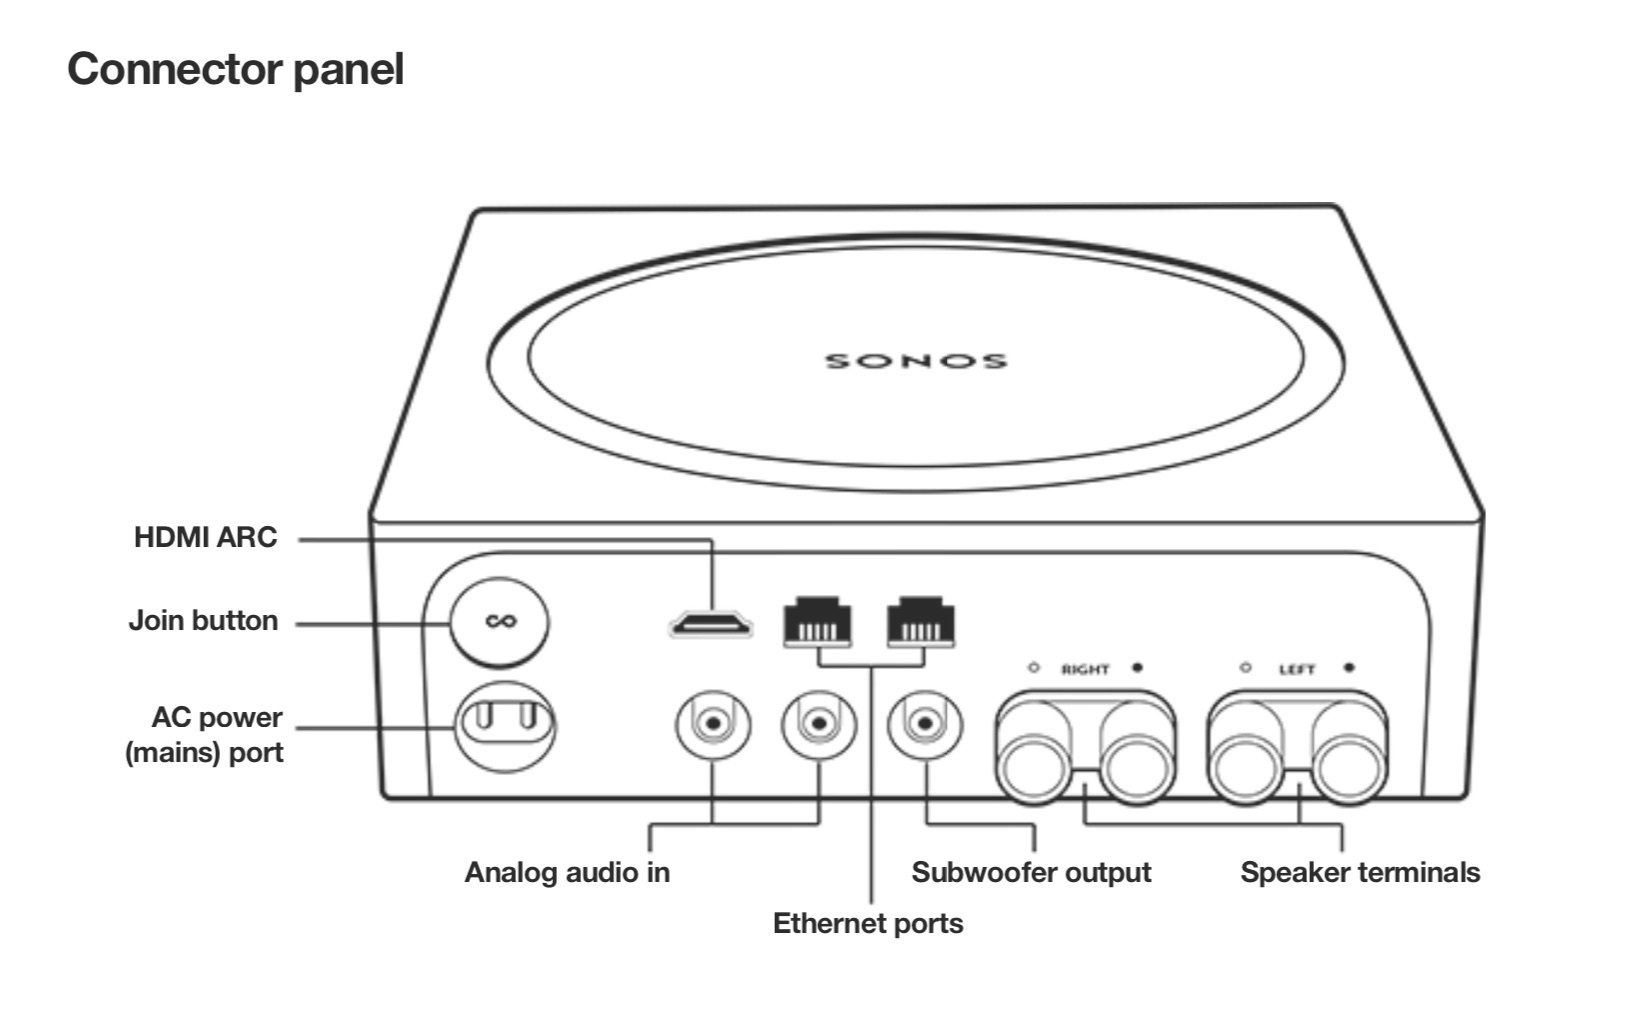 Sonos Amp in inputs | Sonos Community